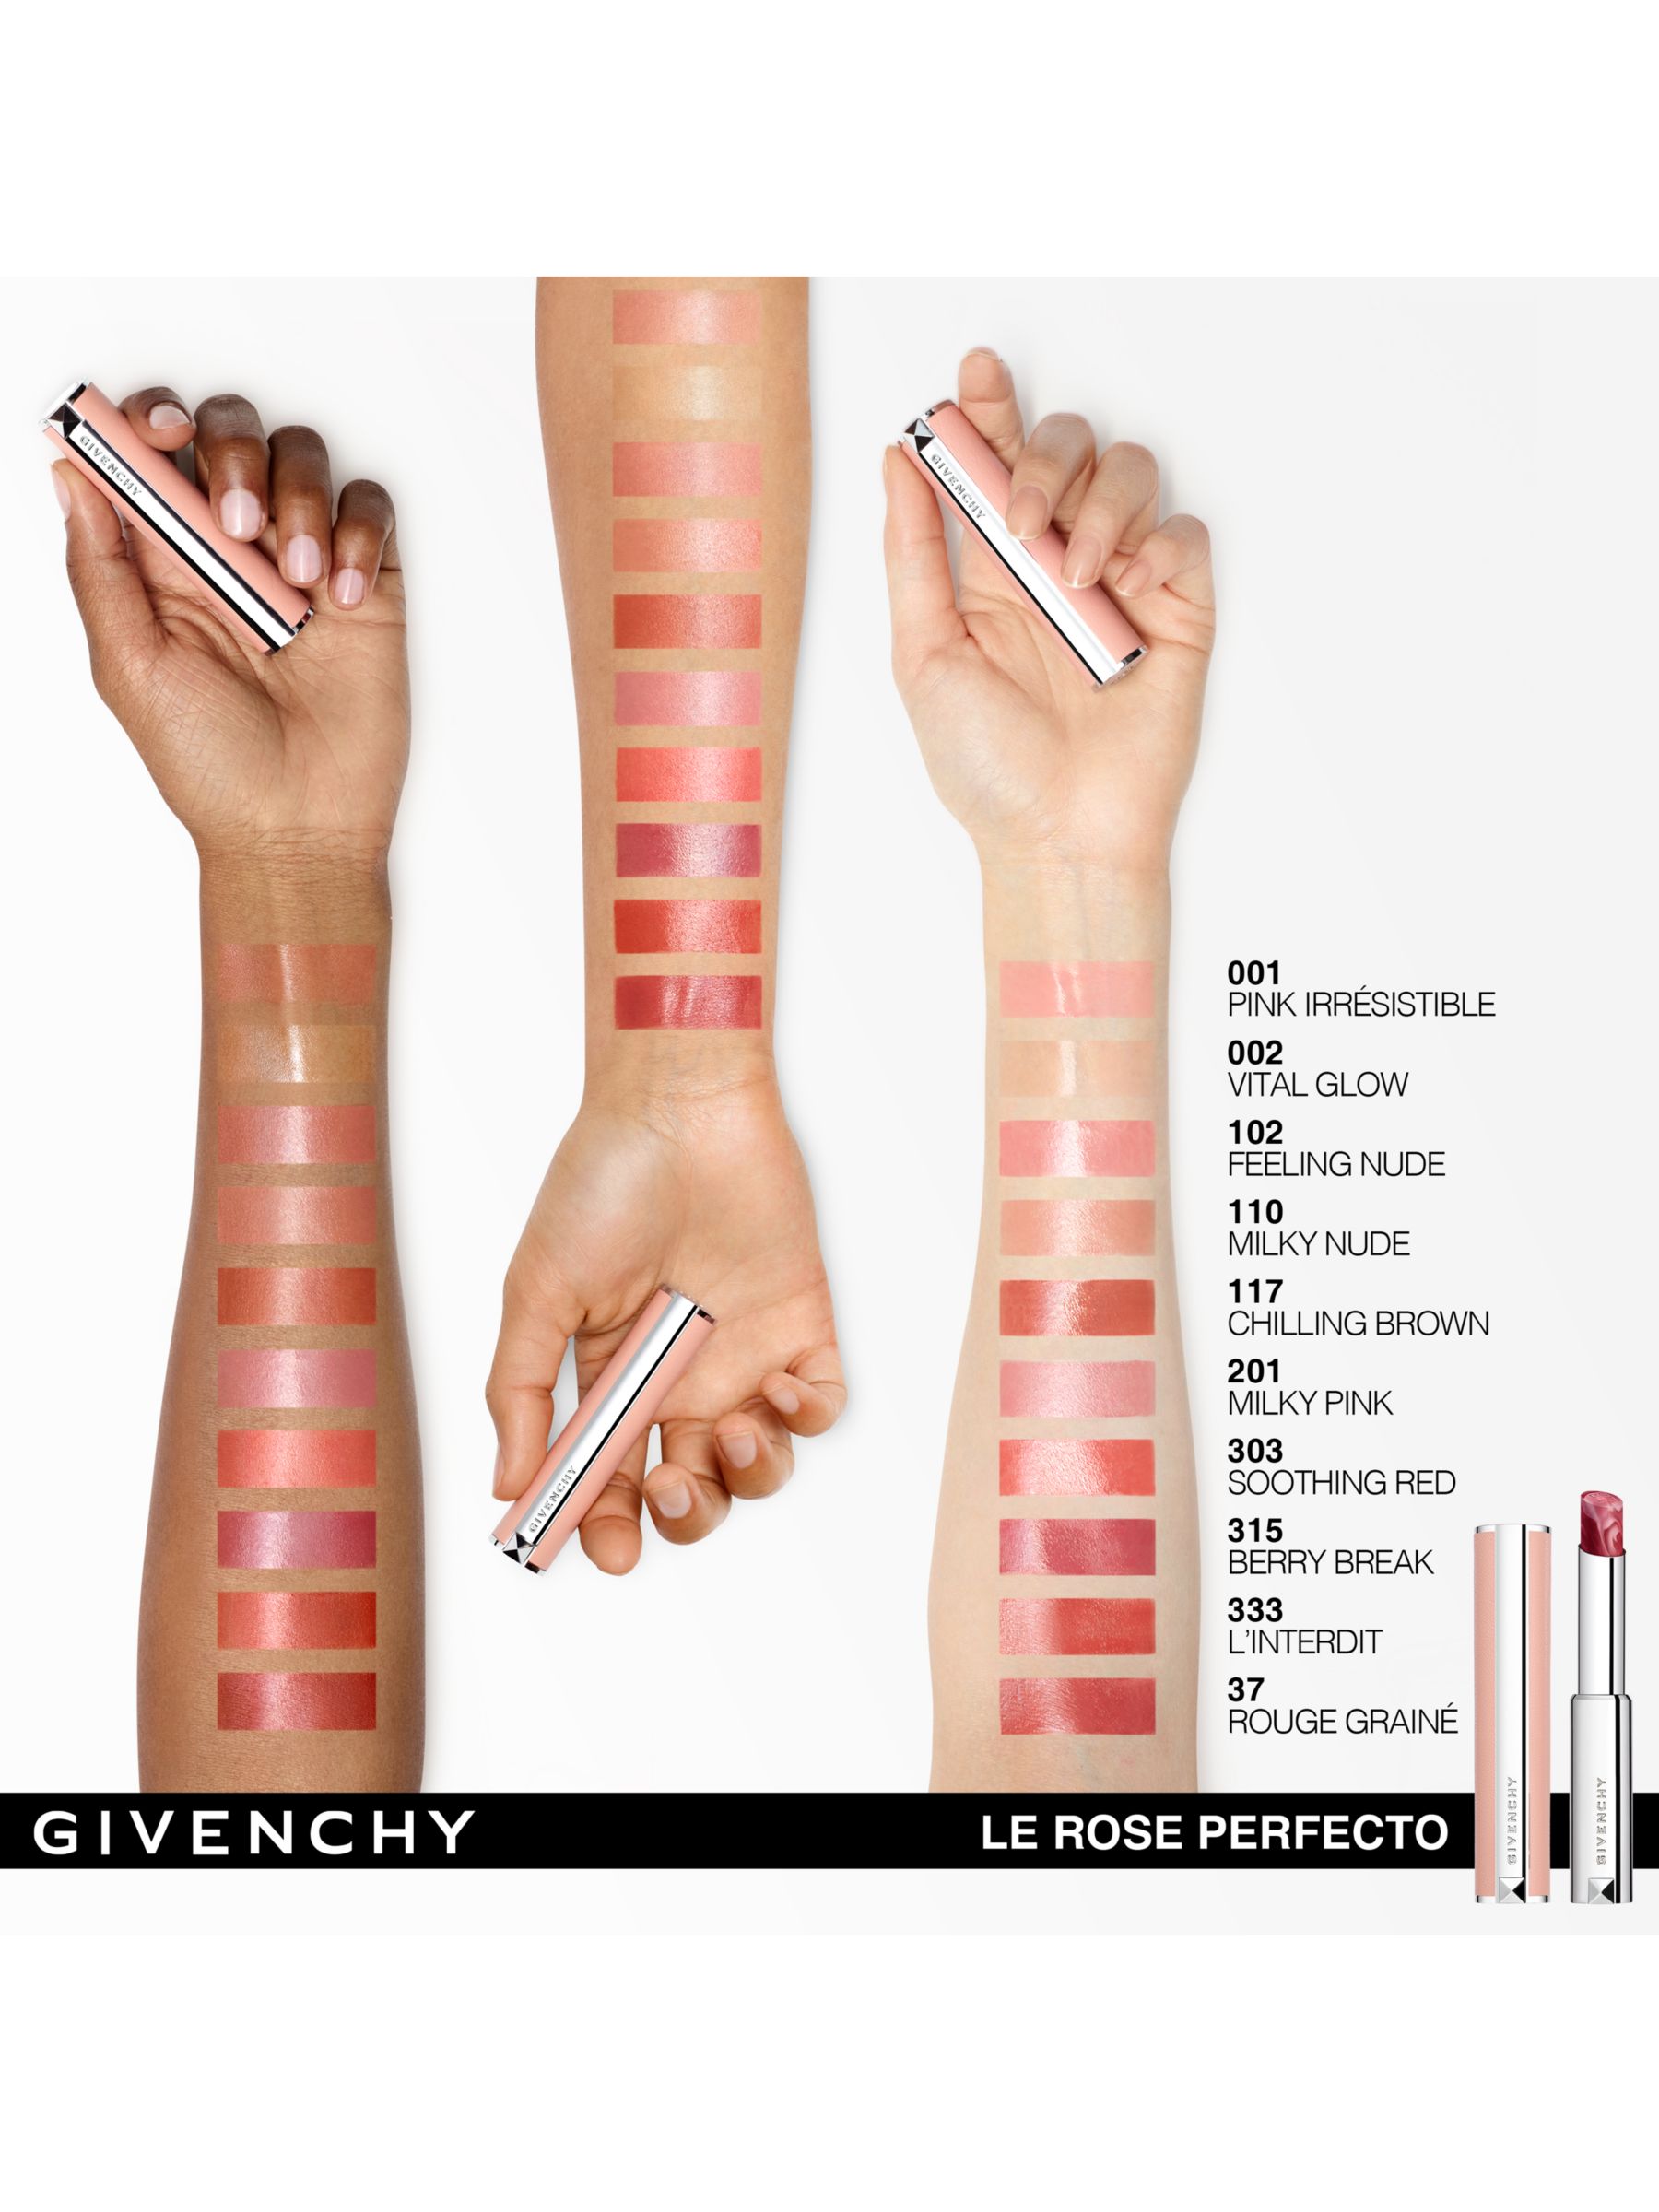 Givenchy Rose Perfecto Beautifying Lip Balm, N333 L'Interdit 6